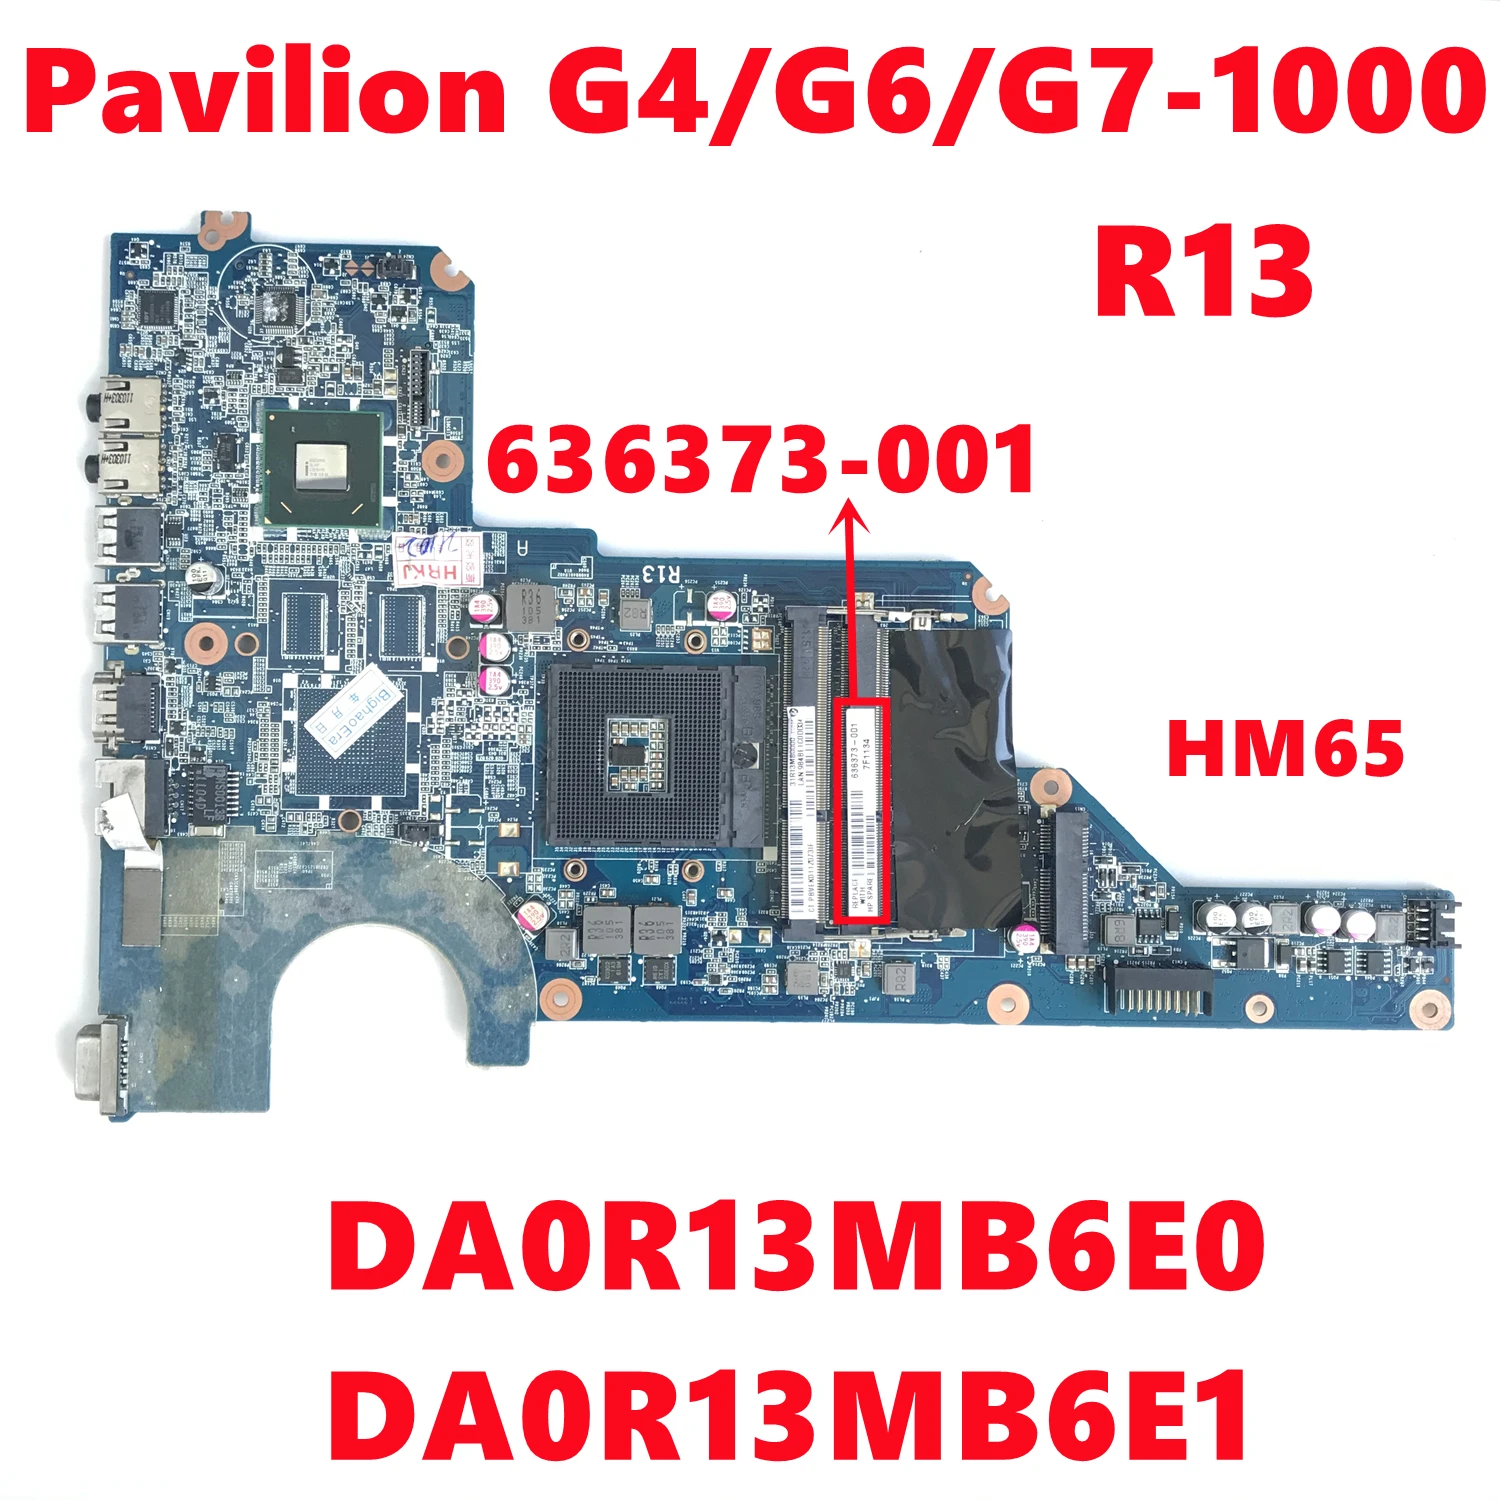 

New 636373-001 636373-501 For HP Pavilion G4-1000 G6-1000 G7-1000 R13 Laptop Motherboard DA0R13MB6E0 DA0R13MB6E1 HM65 DDR3 100%